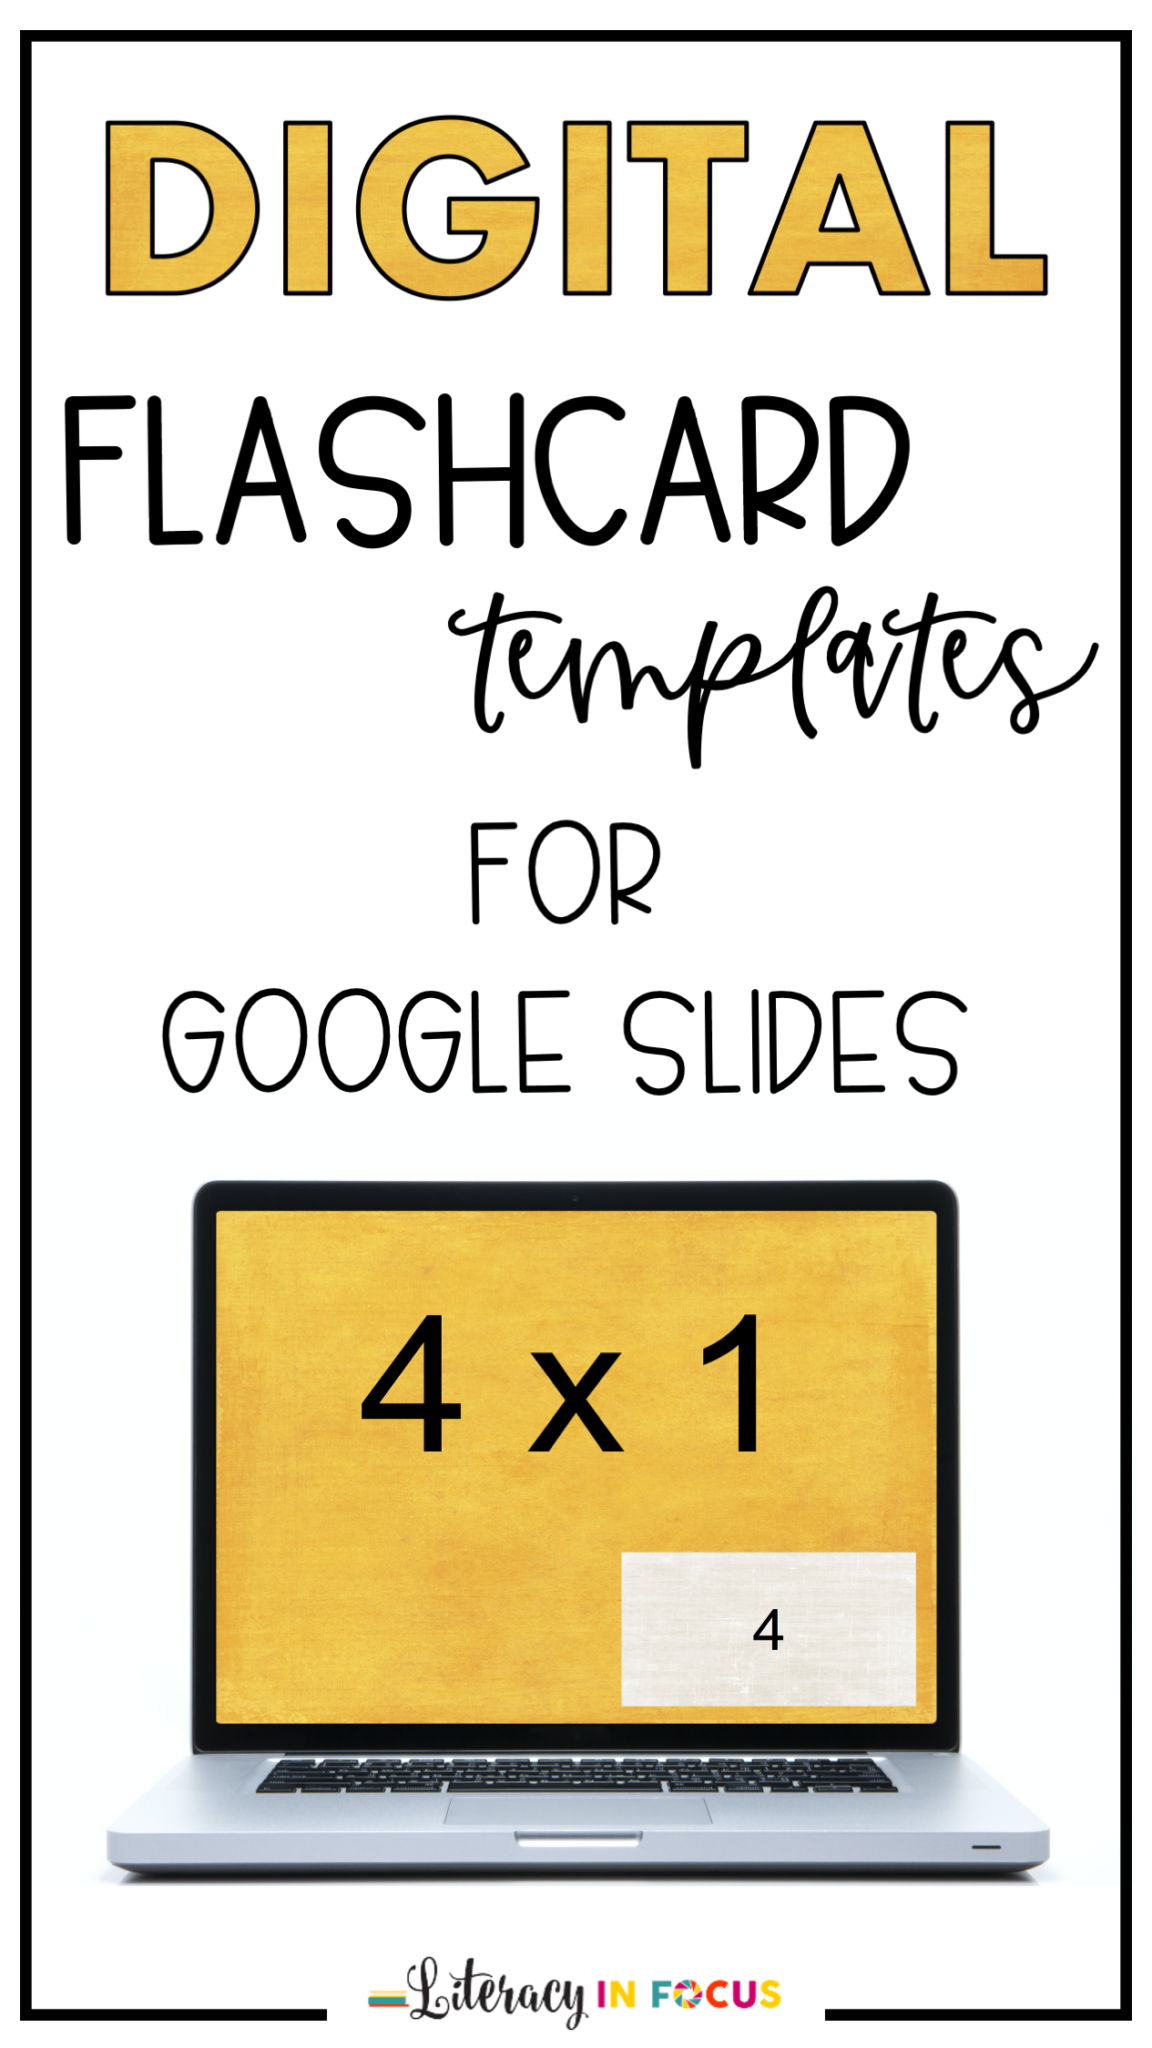 Digital Flashcard Templates For Google Slides In 2020